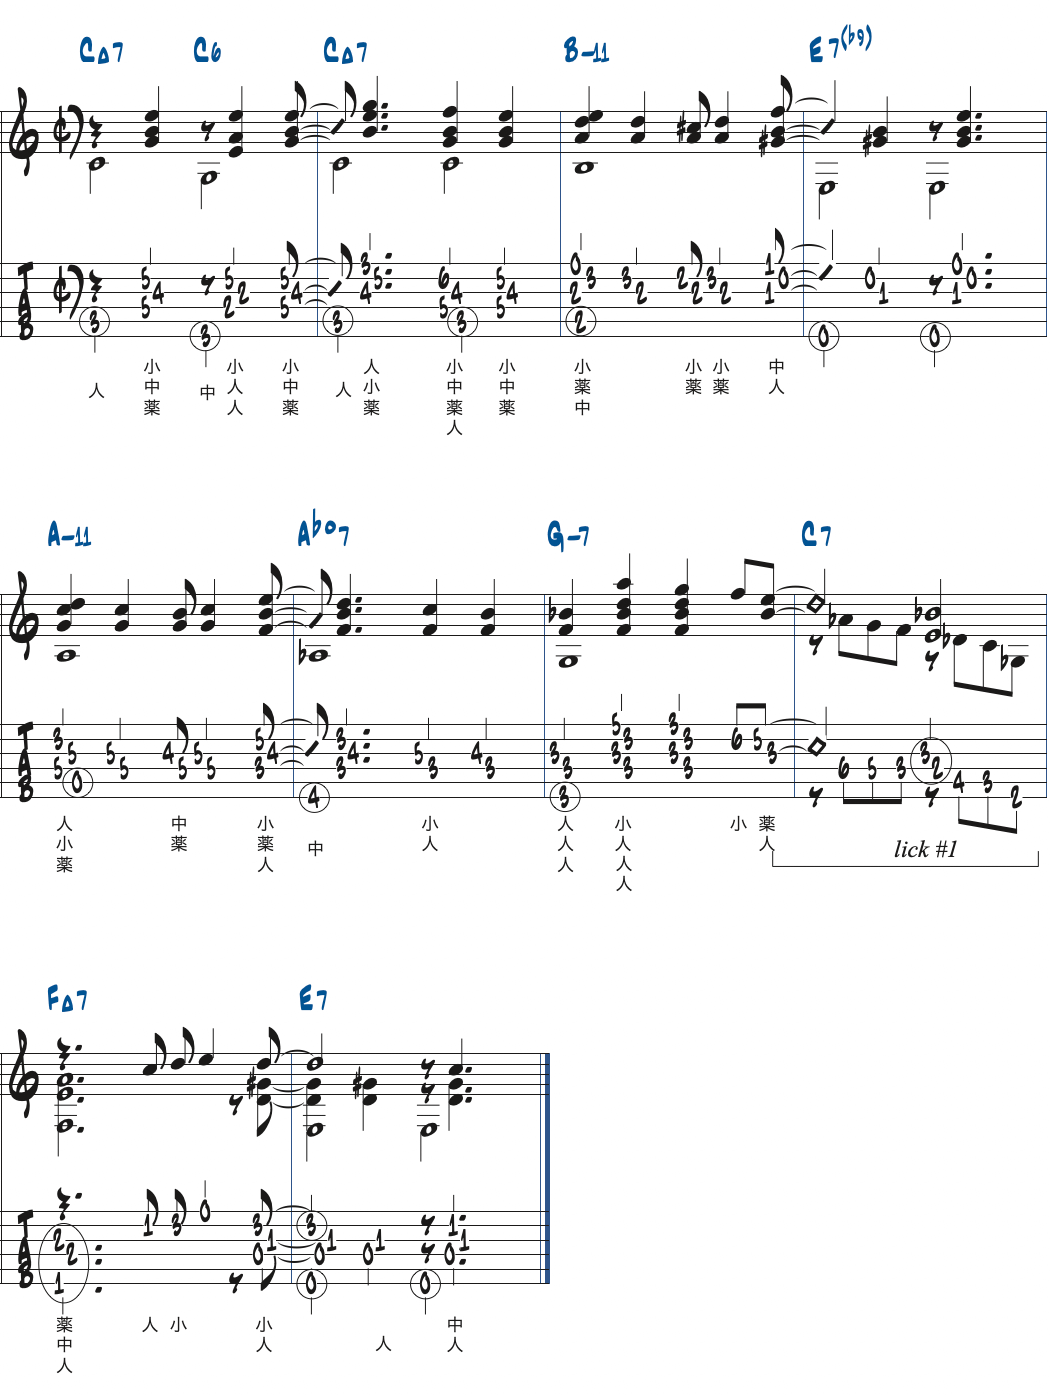 Jimmy Wybleリックを1をFelicidadeのコード進行で使った例楽譜